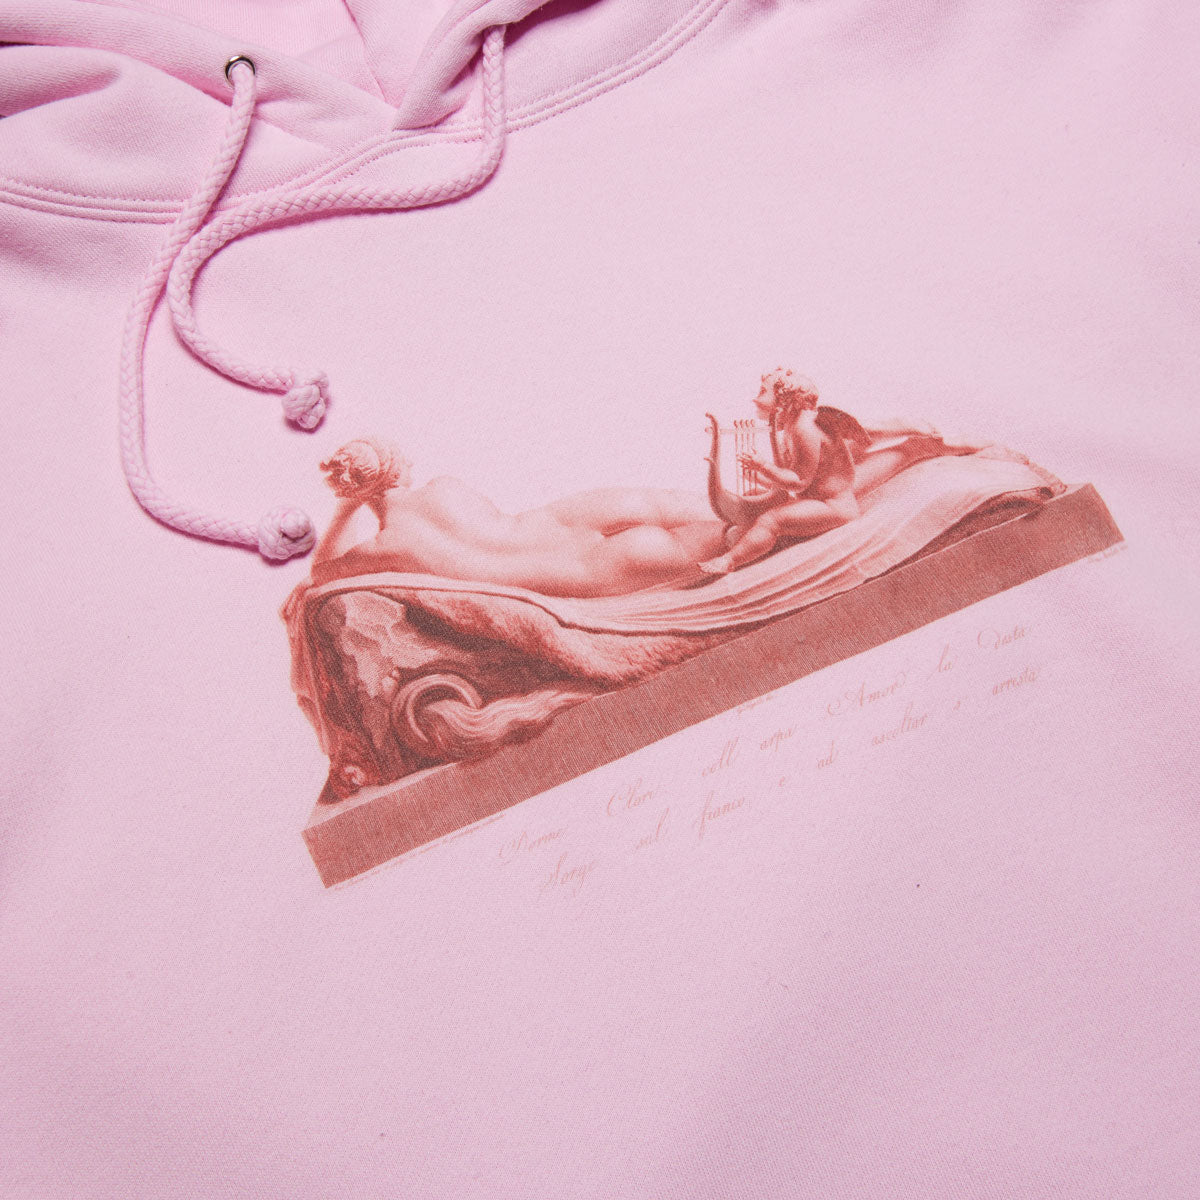 CCS Venus & Amor Hoodie - Light Pink image 2